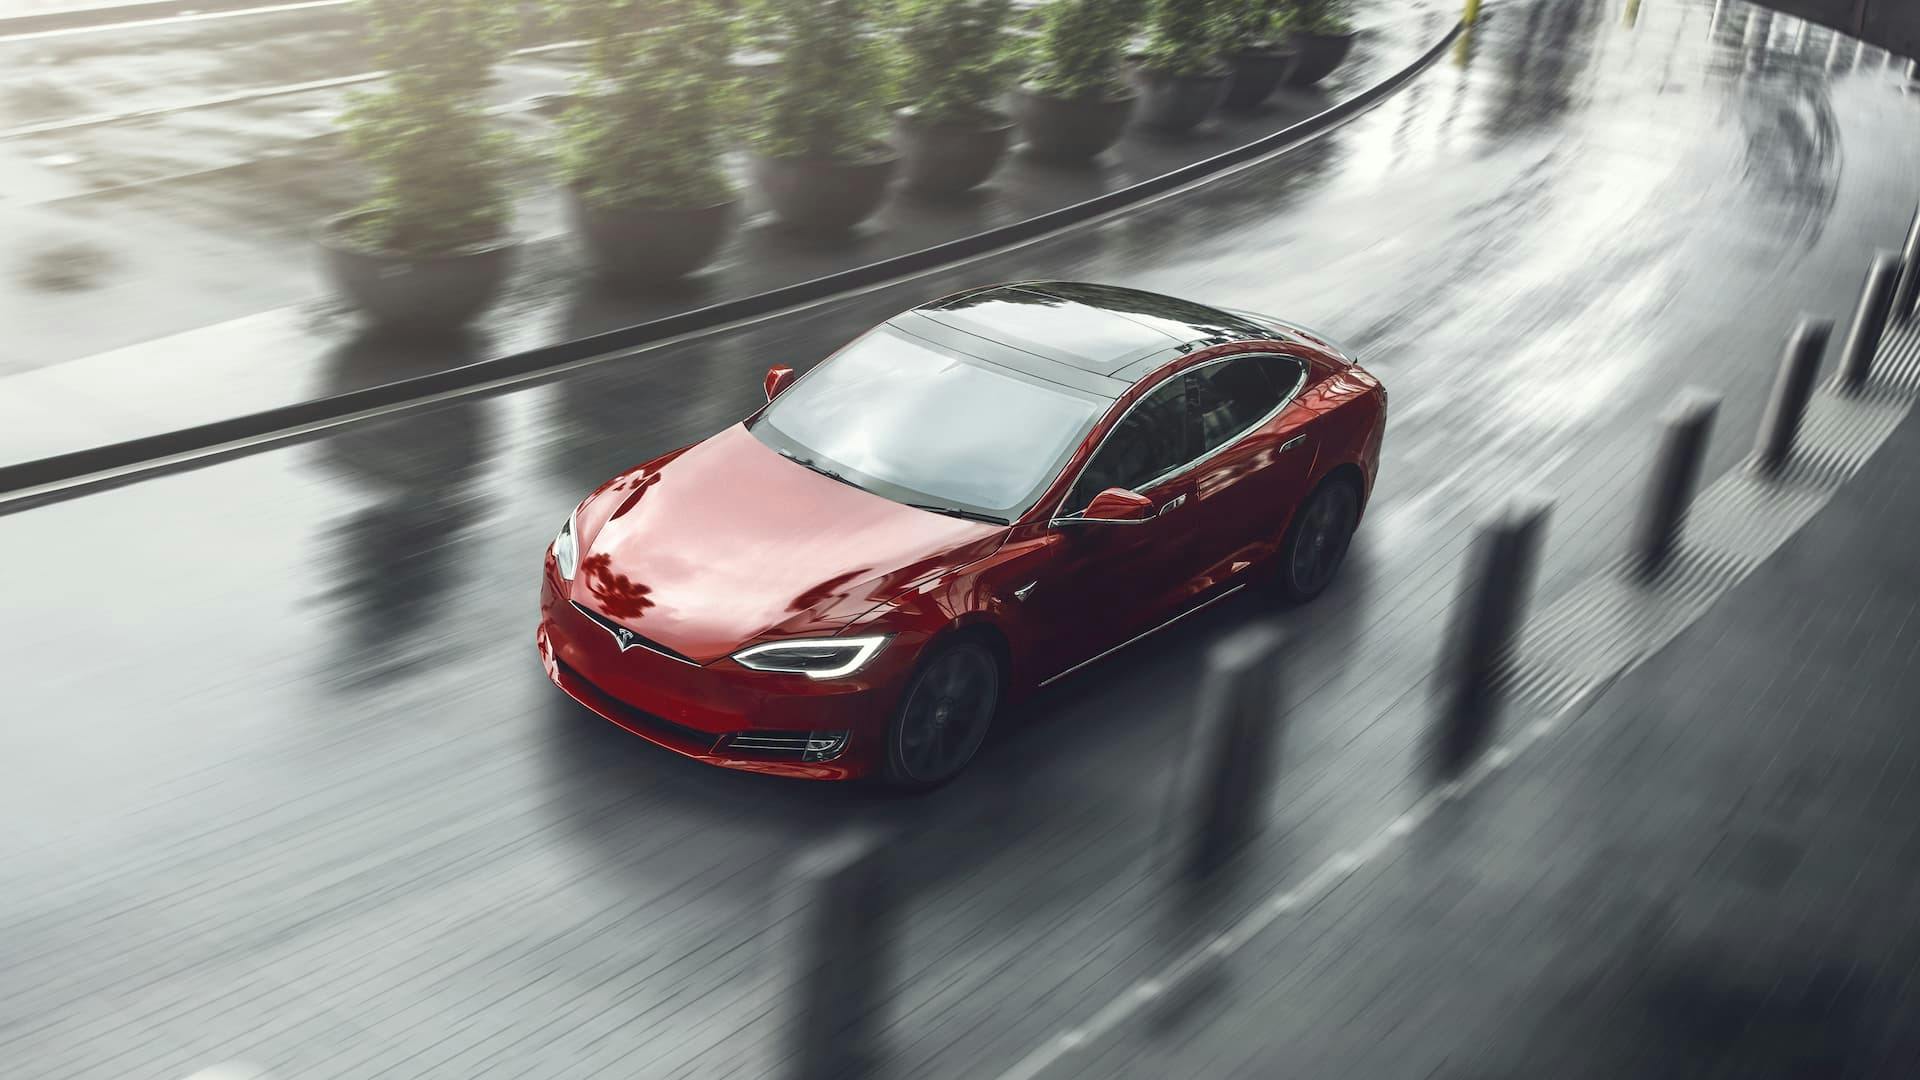 Red Tesla Model S driving